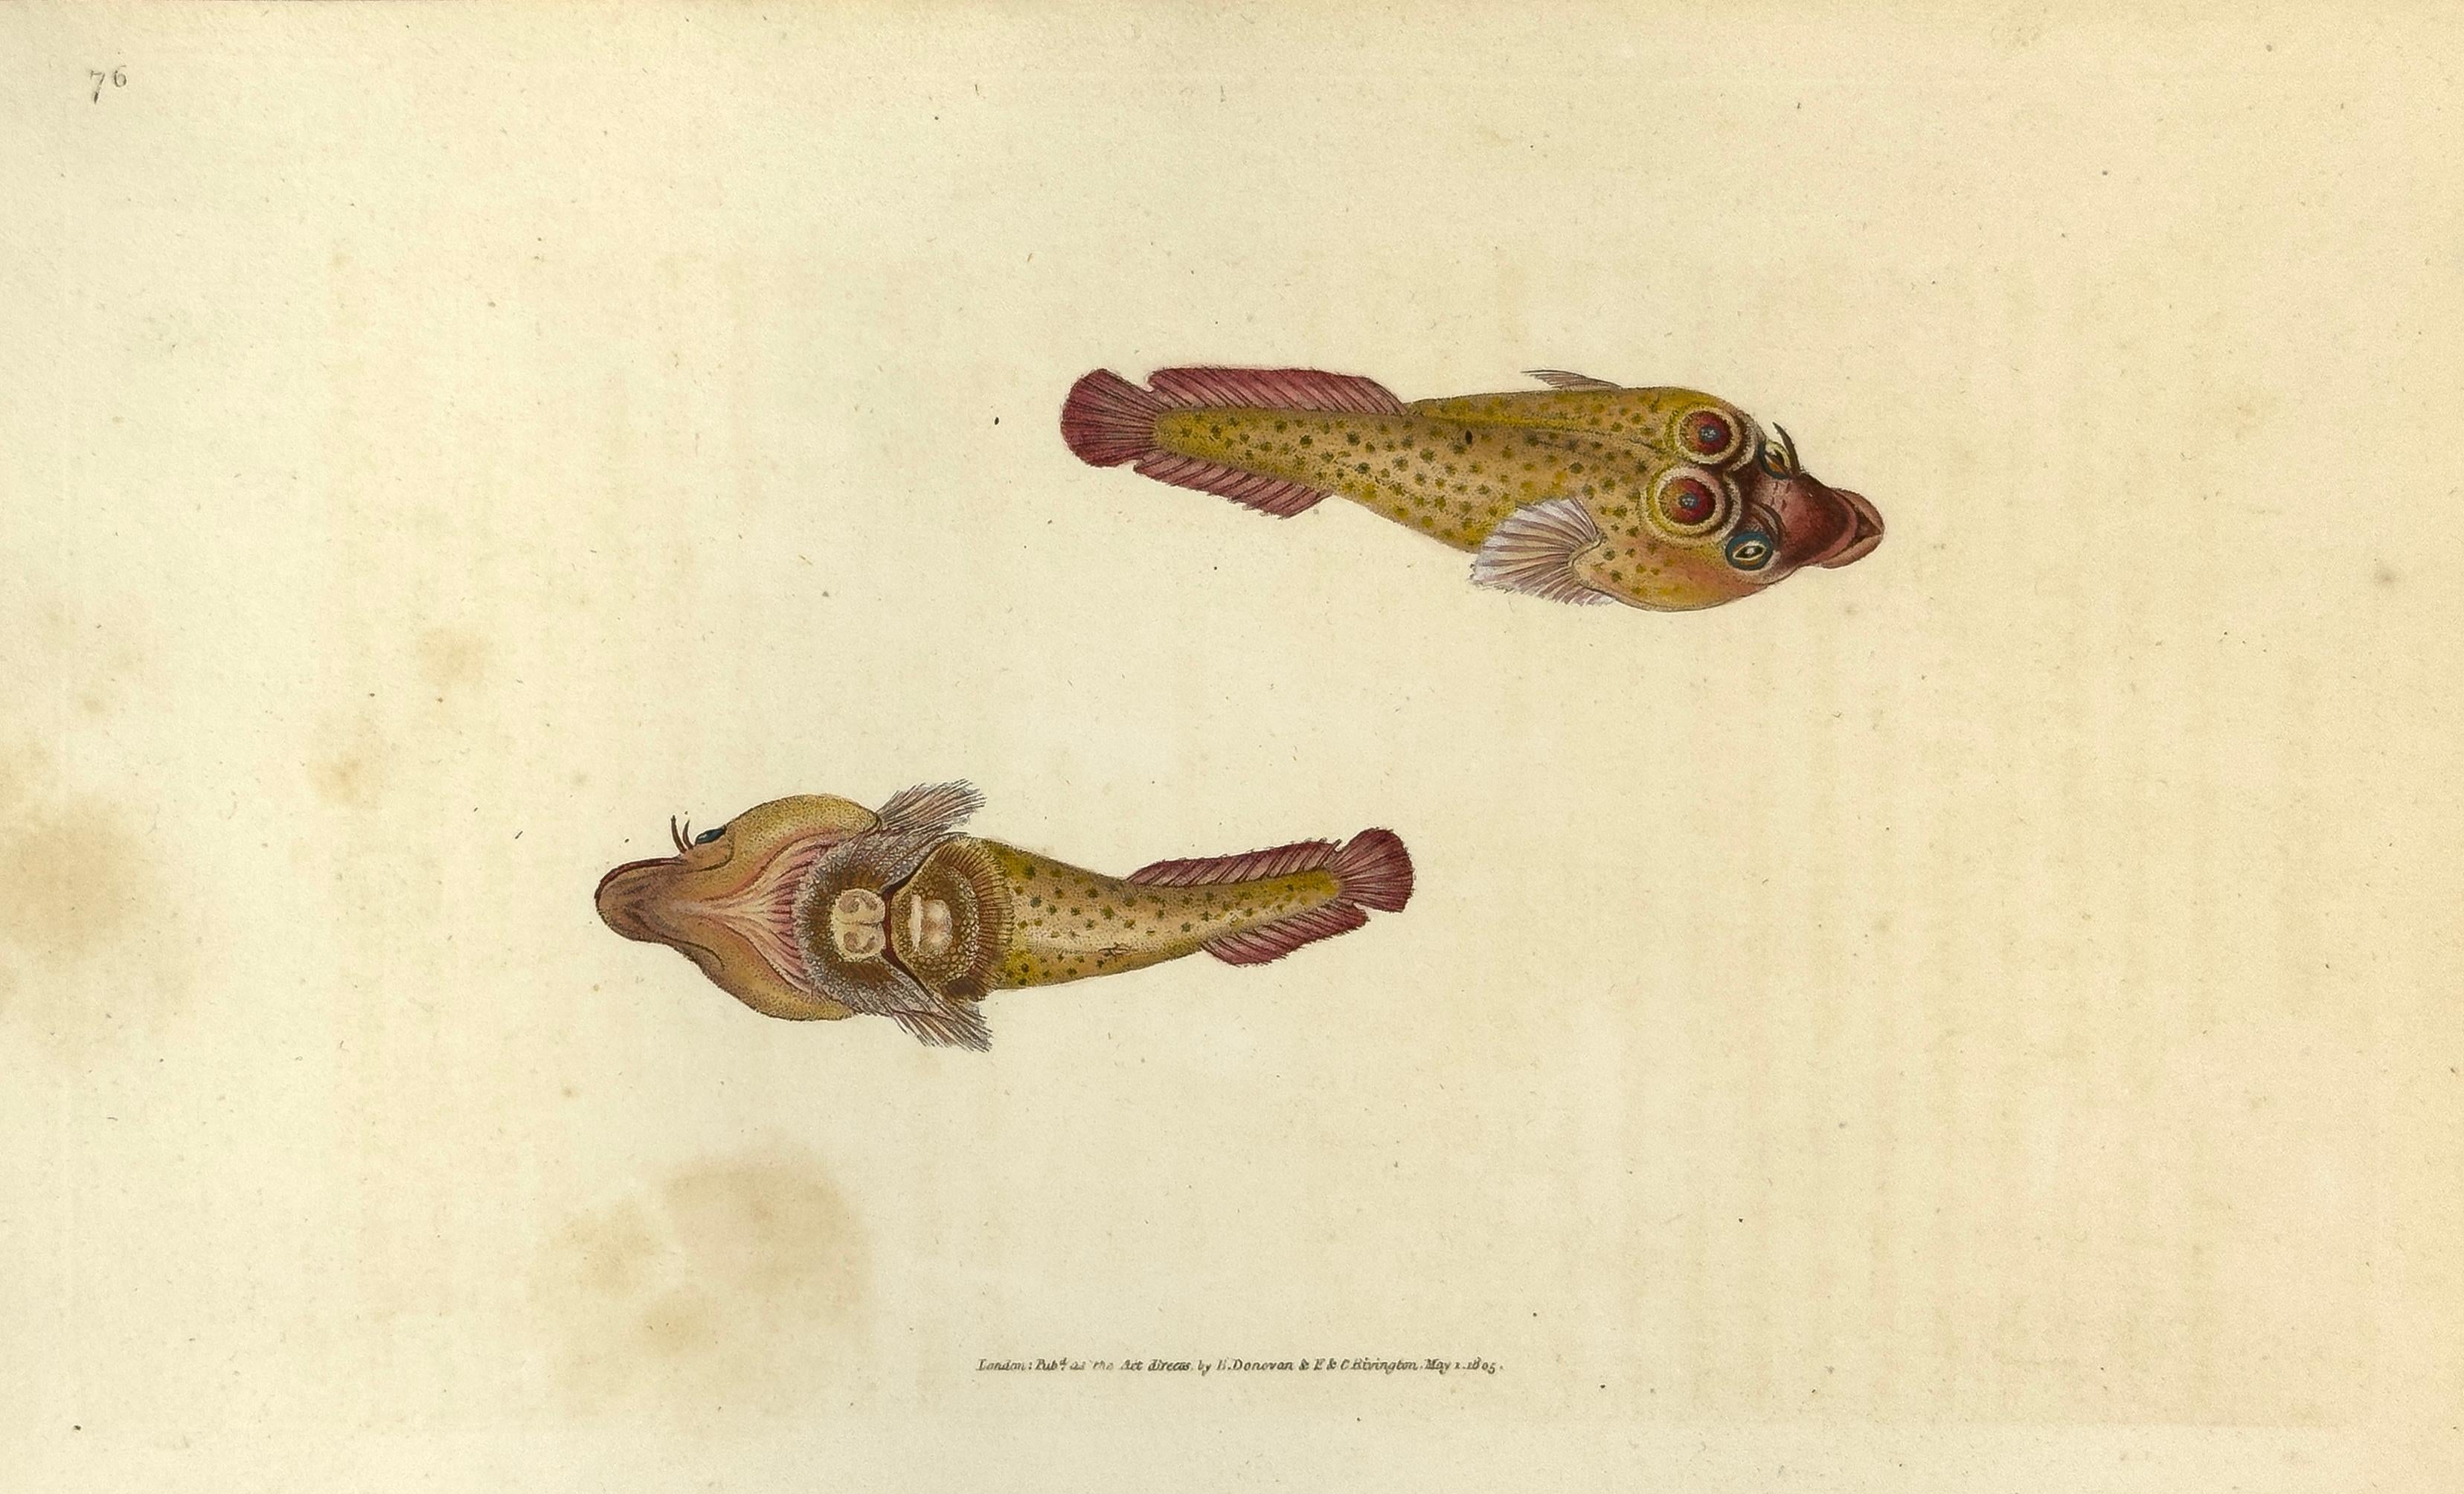 Animal Print Edward Donovan - 76 : Ocellatus Cyclopterus ocellatus